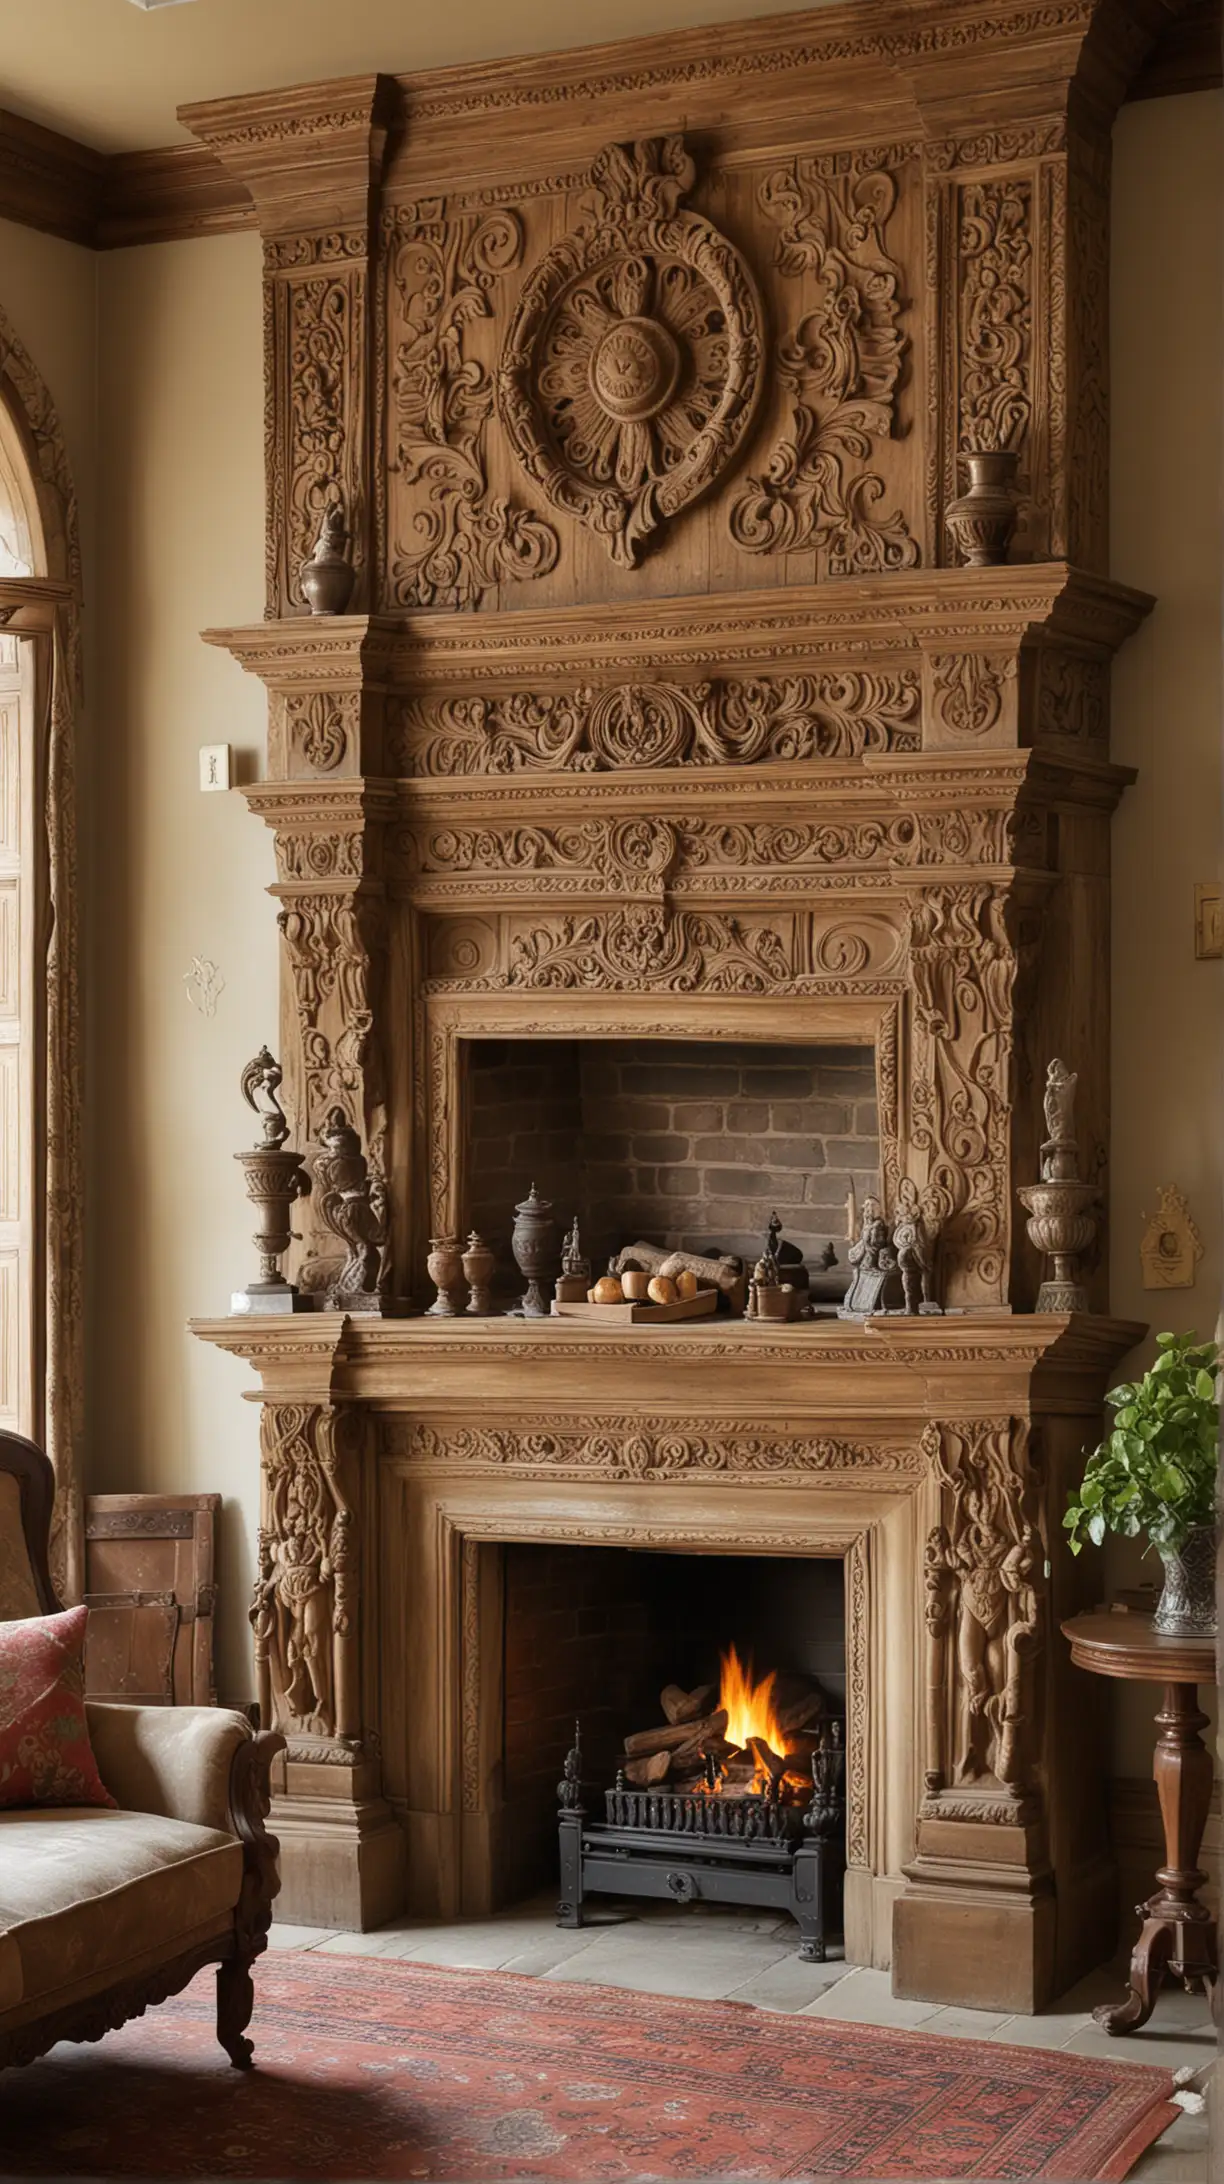 Vintage Living Room with Ornate Fireplace OldWorld Charm Captured in Antique Interior